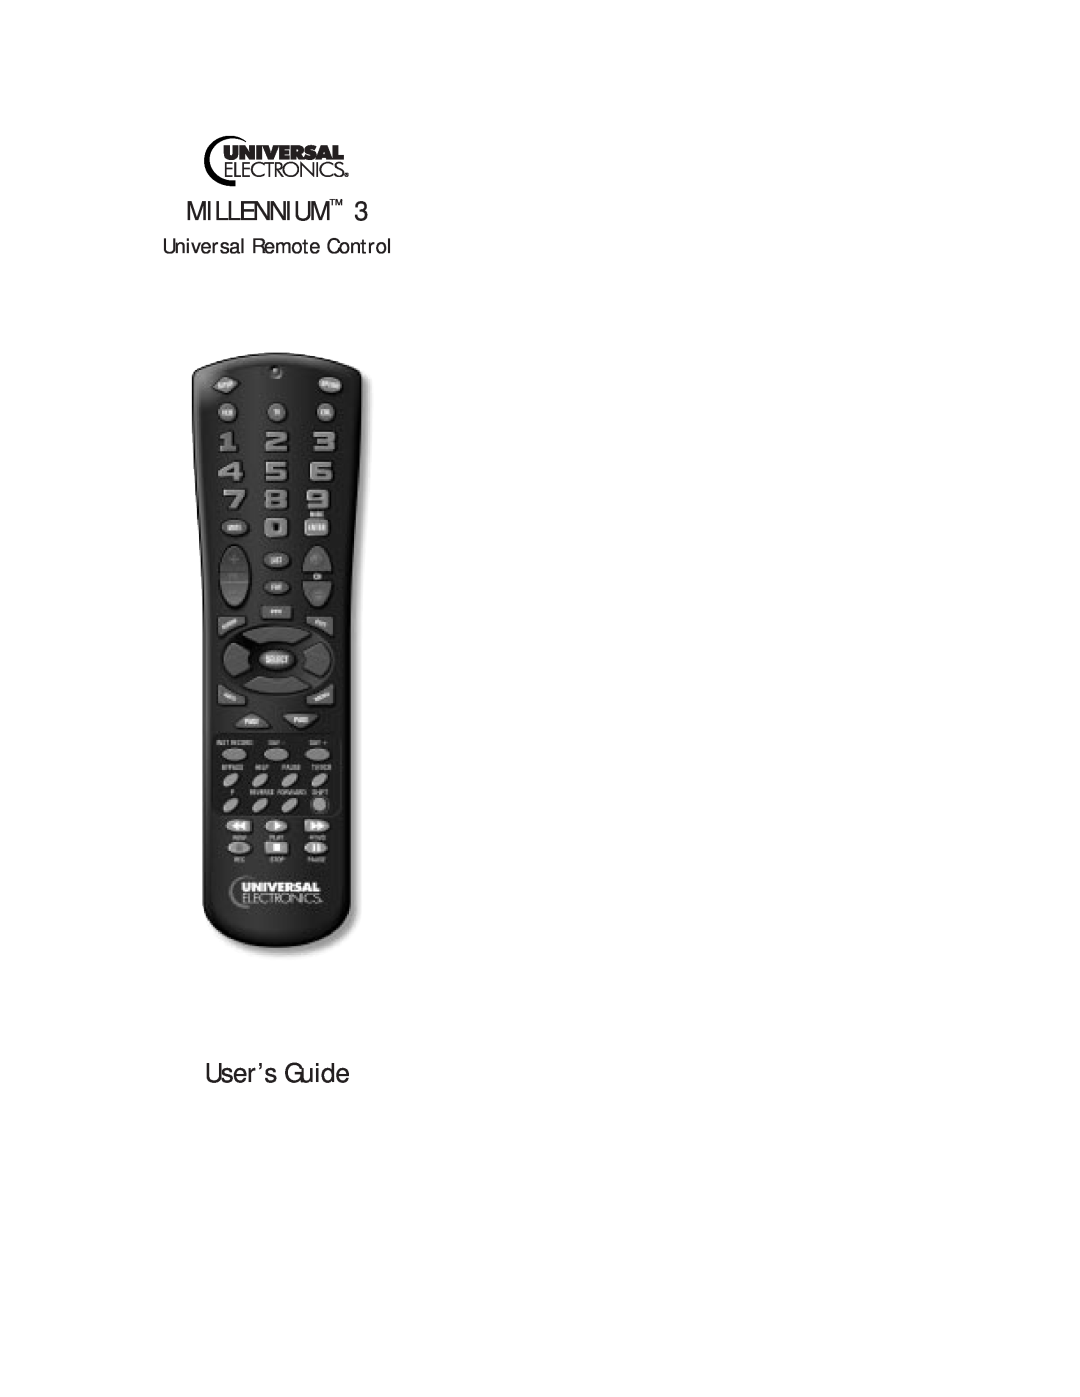 Universal Electronics pmn manual Universal Remote Control, Millennium, User’s Guide 